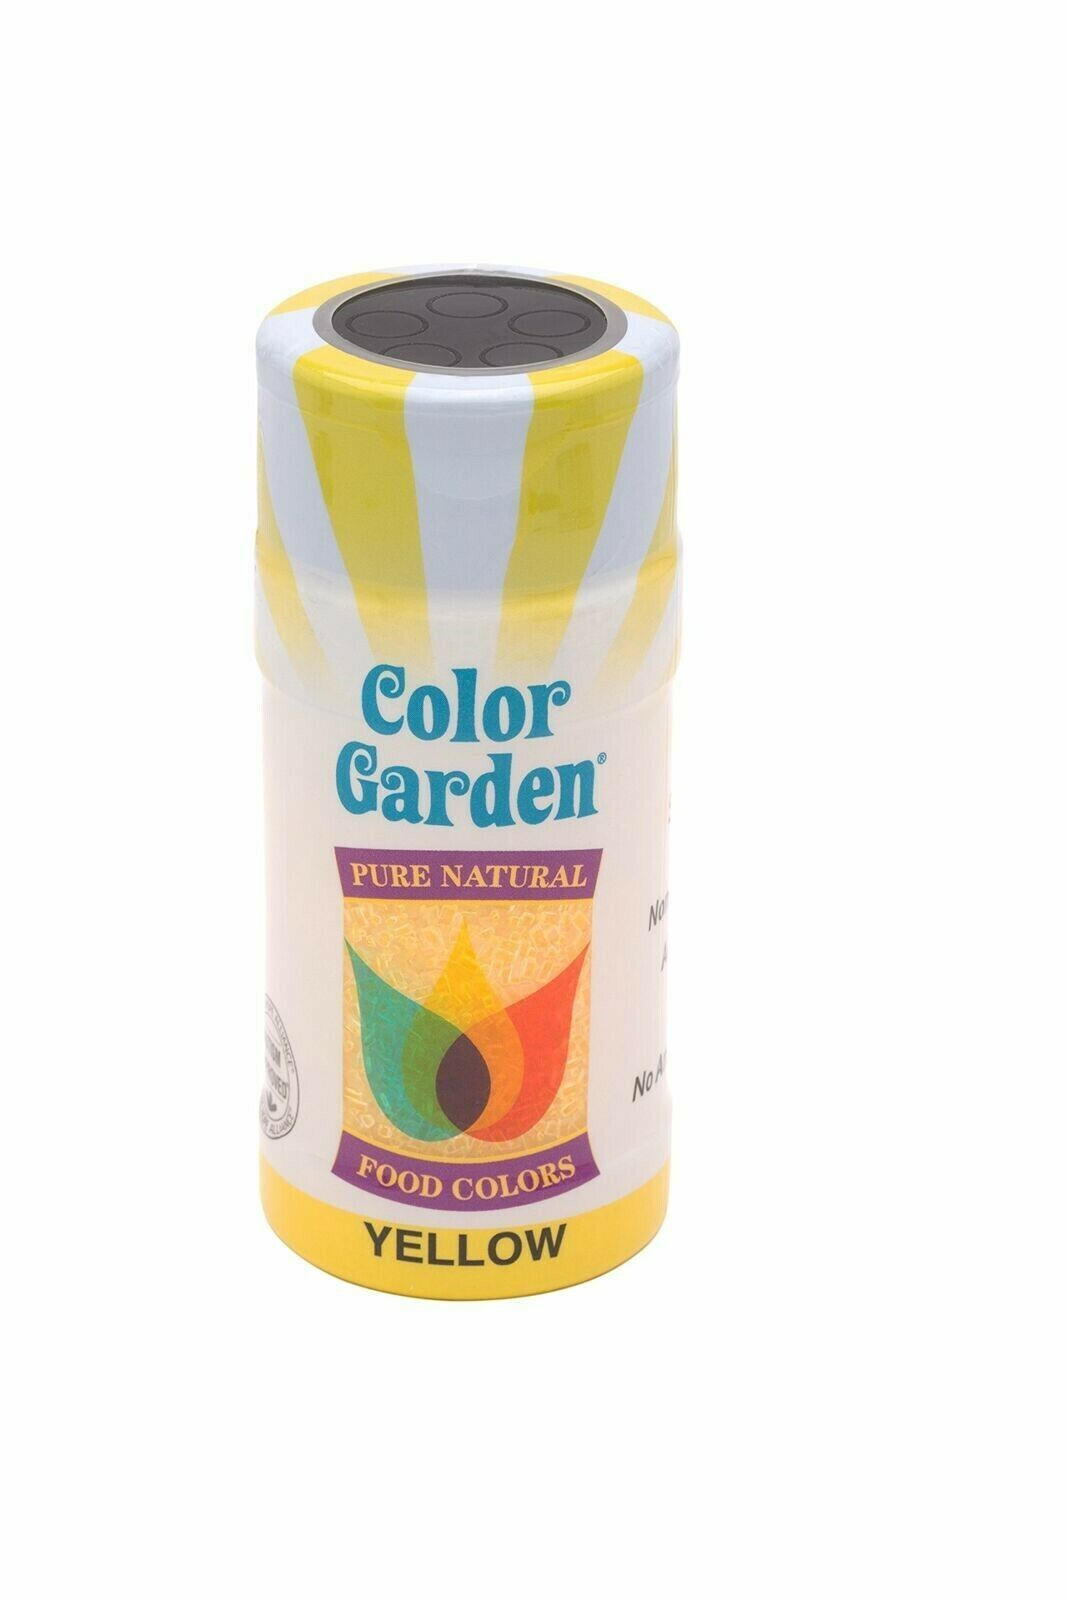 Color Garden Naturally Colored Sugar Crystals, Yellow 3 oz - $12.72